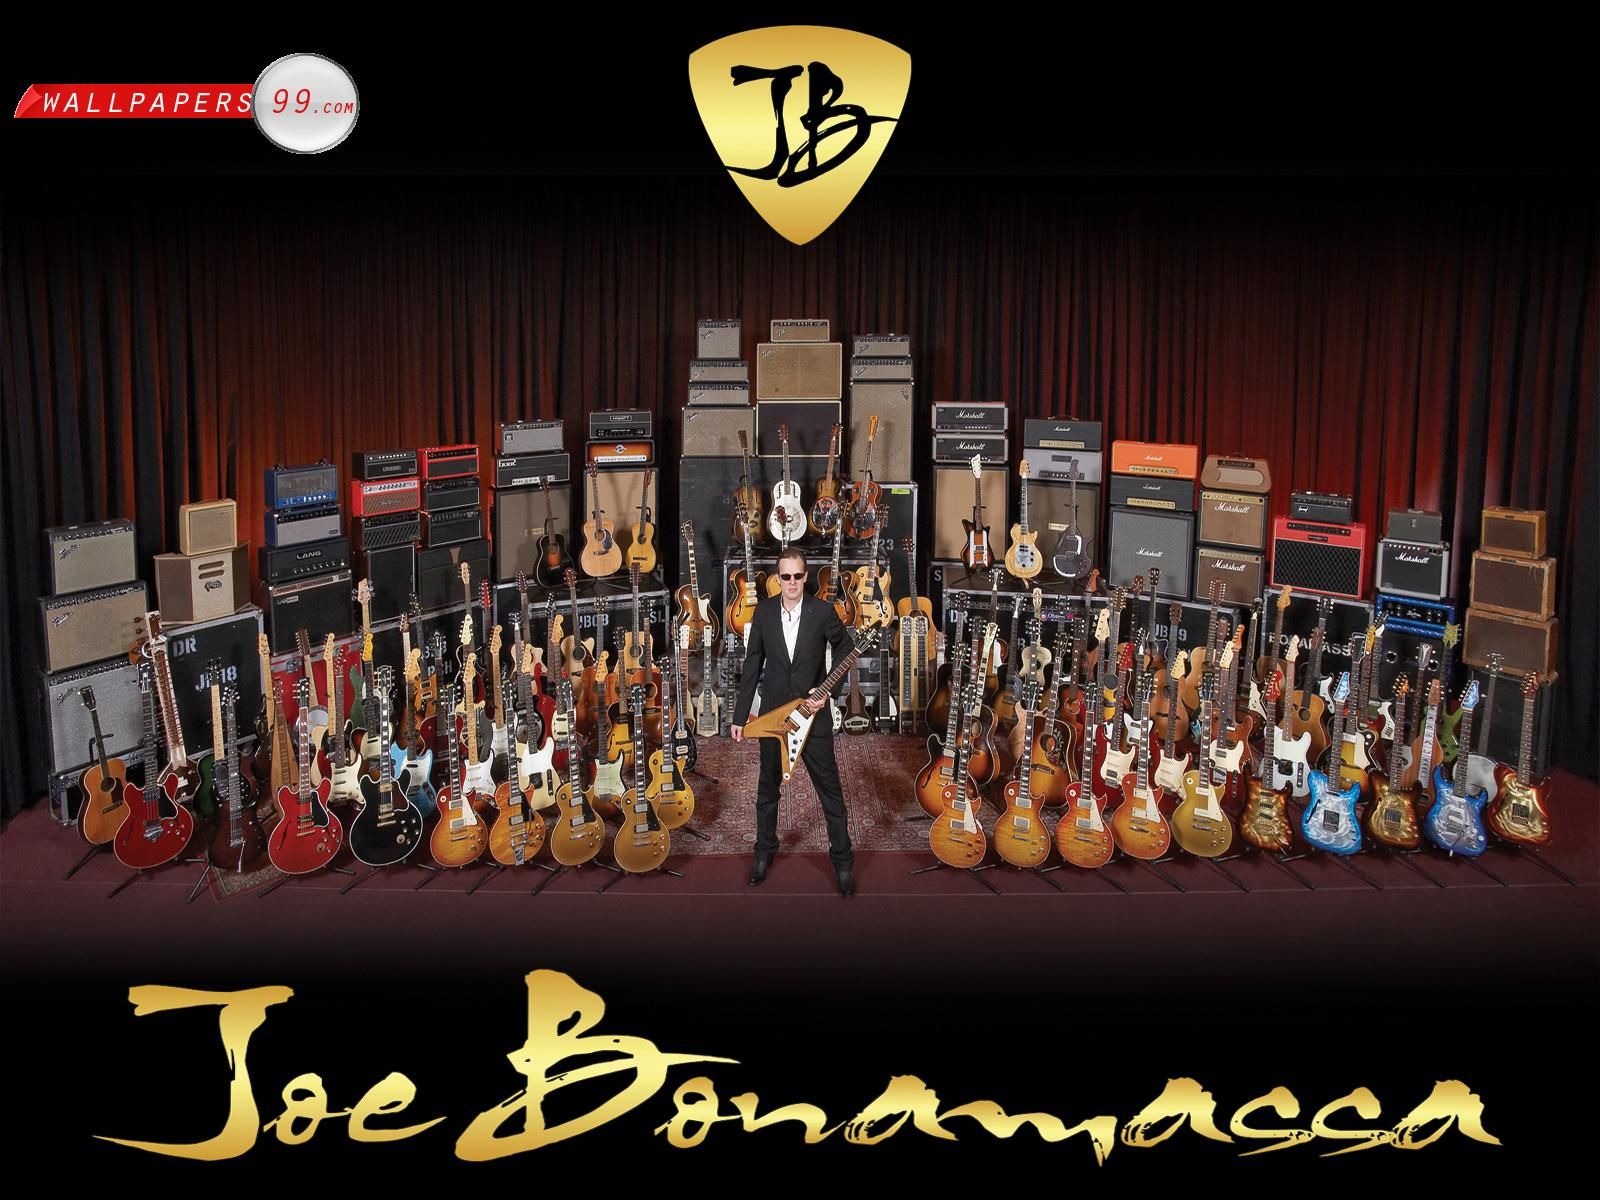 Joe bonamassa guitar collection photo off